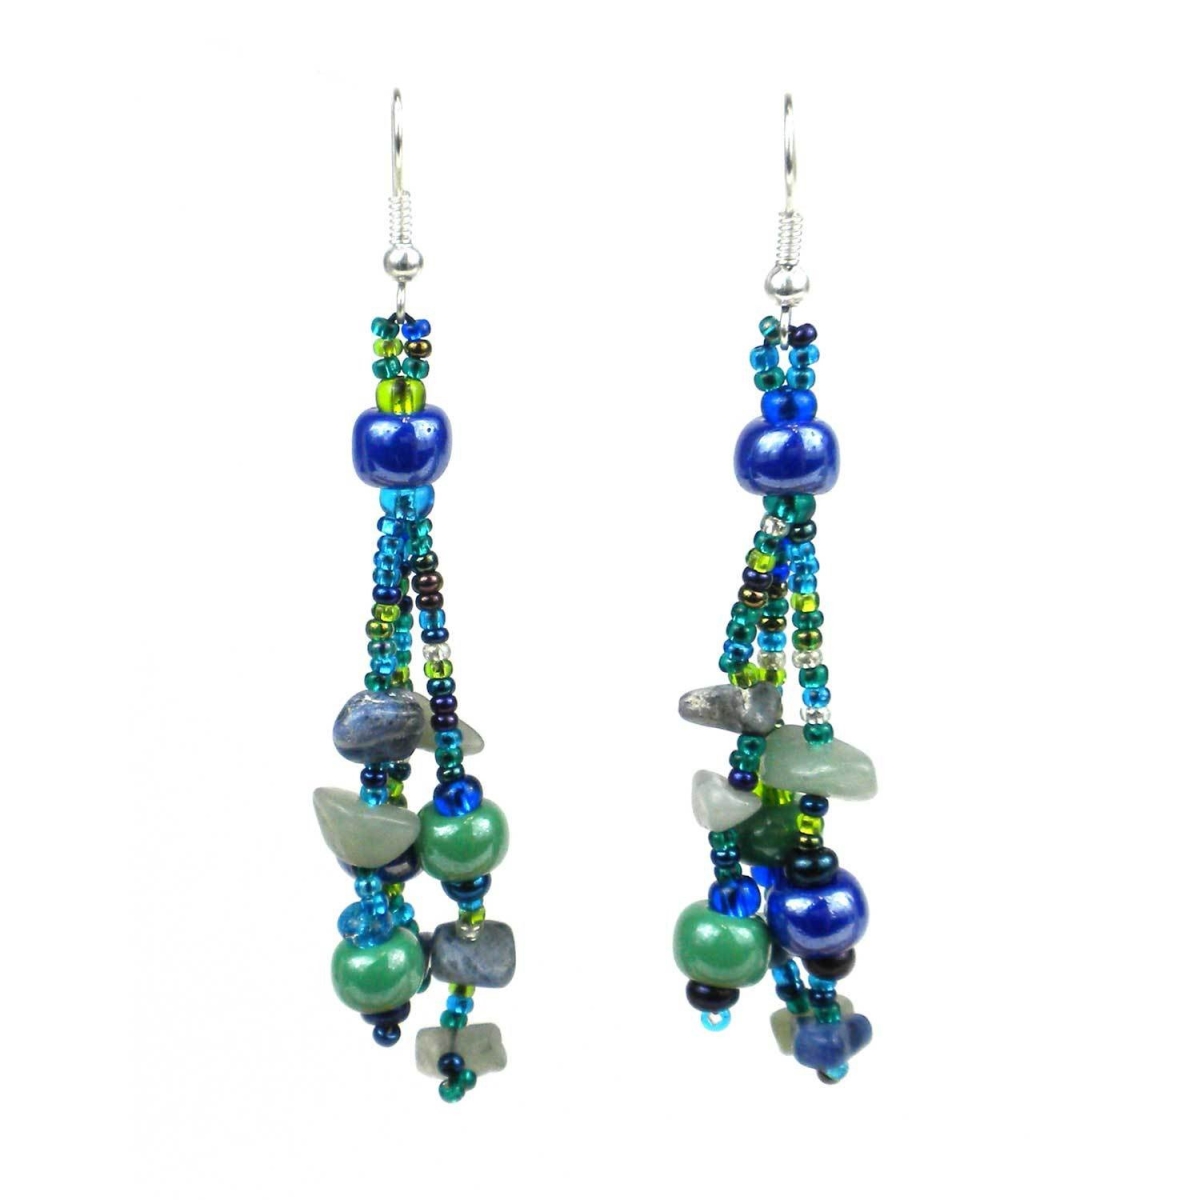 Lije-9-1-229554 Handmade & Fair Trade Beach Ball Earrings - Green Blue